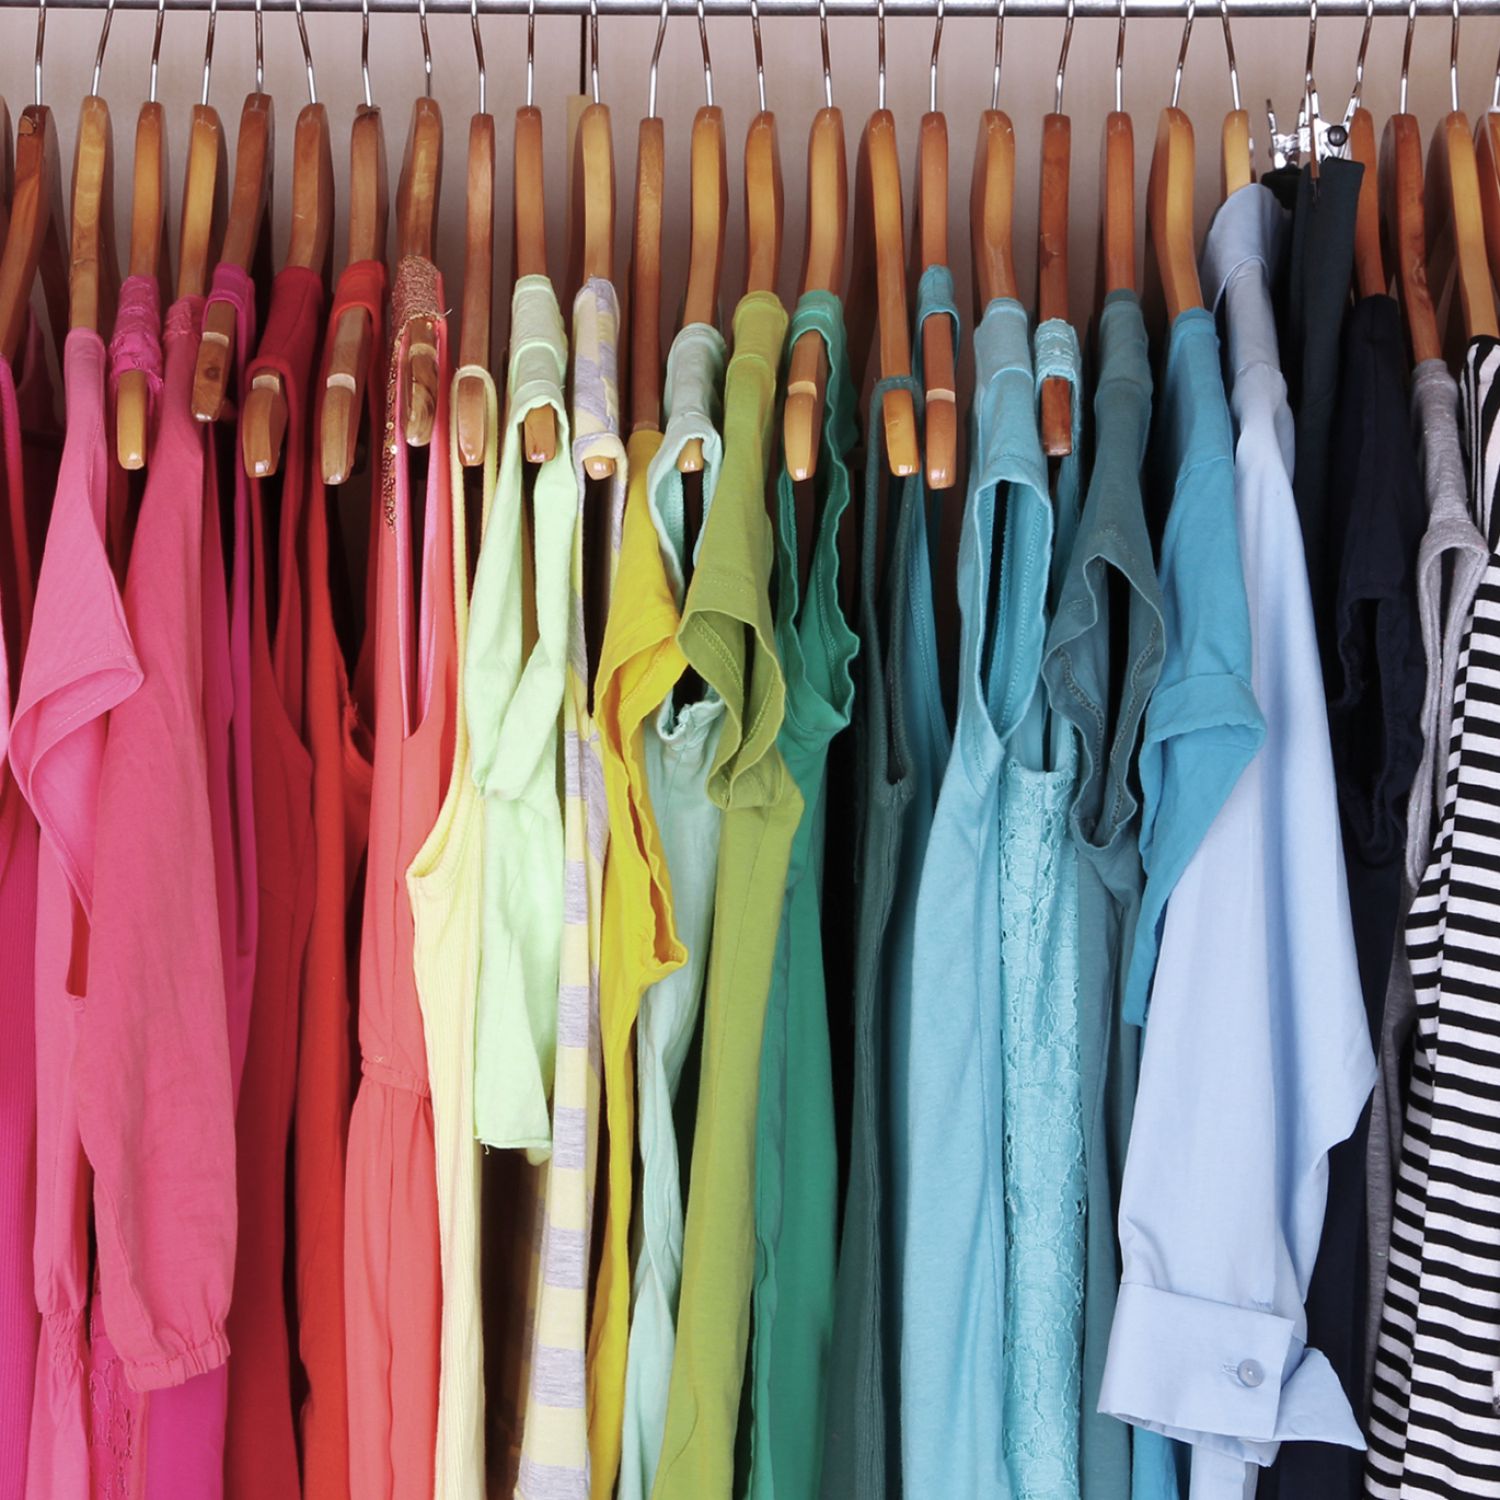 Rainbow organized clothes in a closet